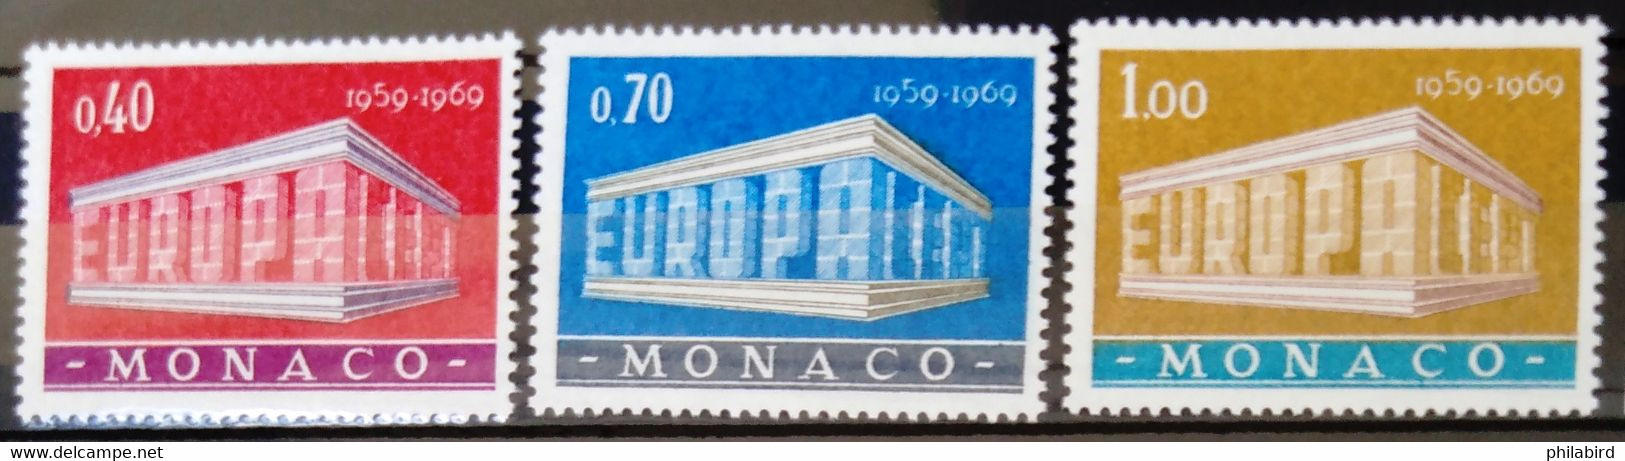 EUROPA 1969 - MONACO                  N° 789/791                     NEUF** - 1969